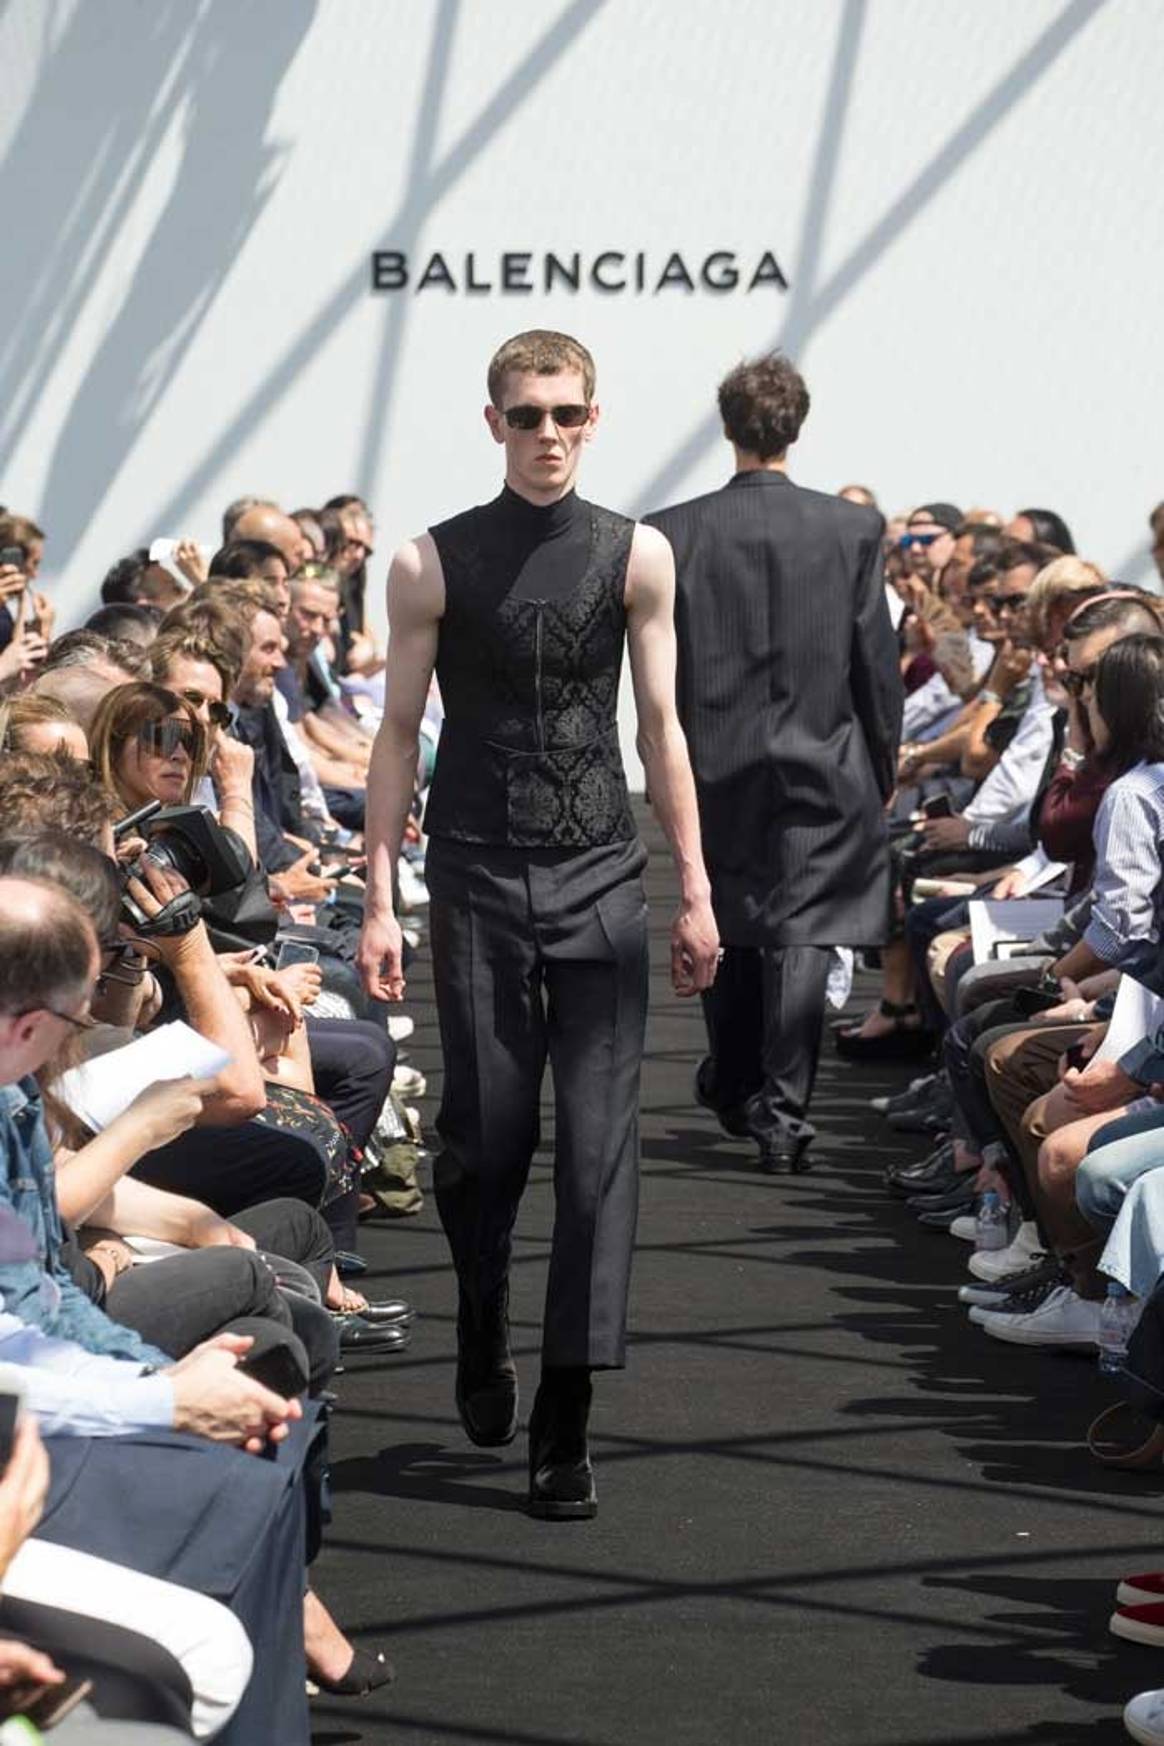 Balenciaga debutó en moda masculina apelando a los códigos del fundador